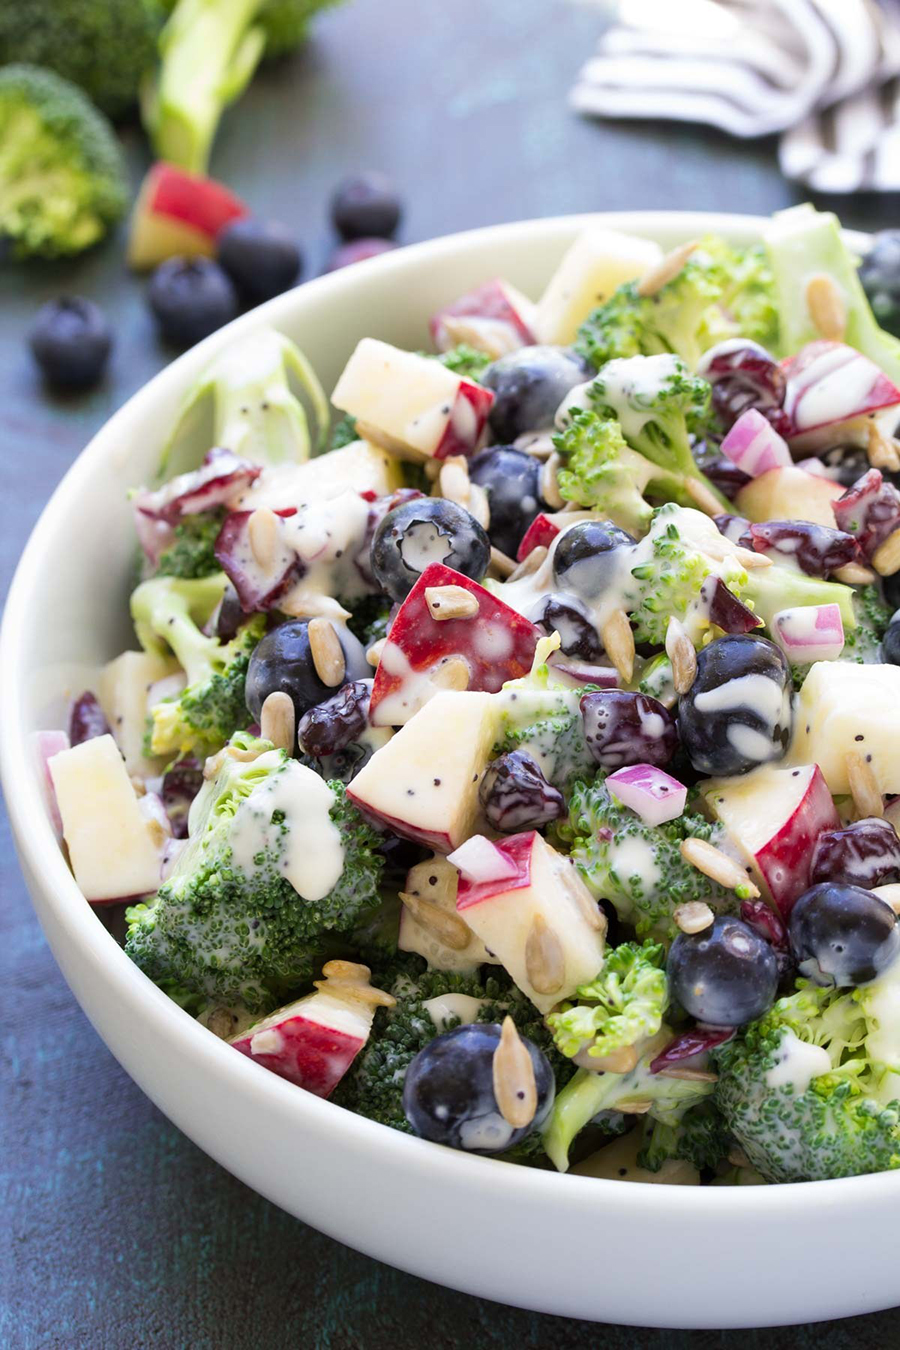 Recipe of the Week: Very Berry Broccoli Salad